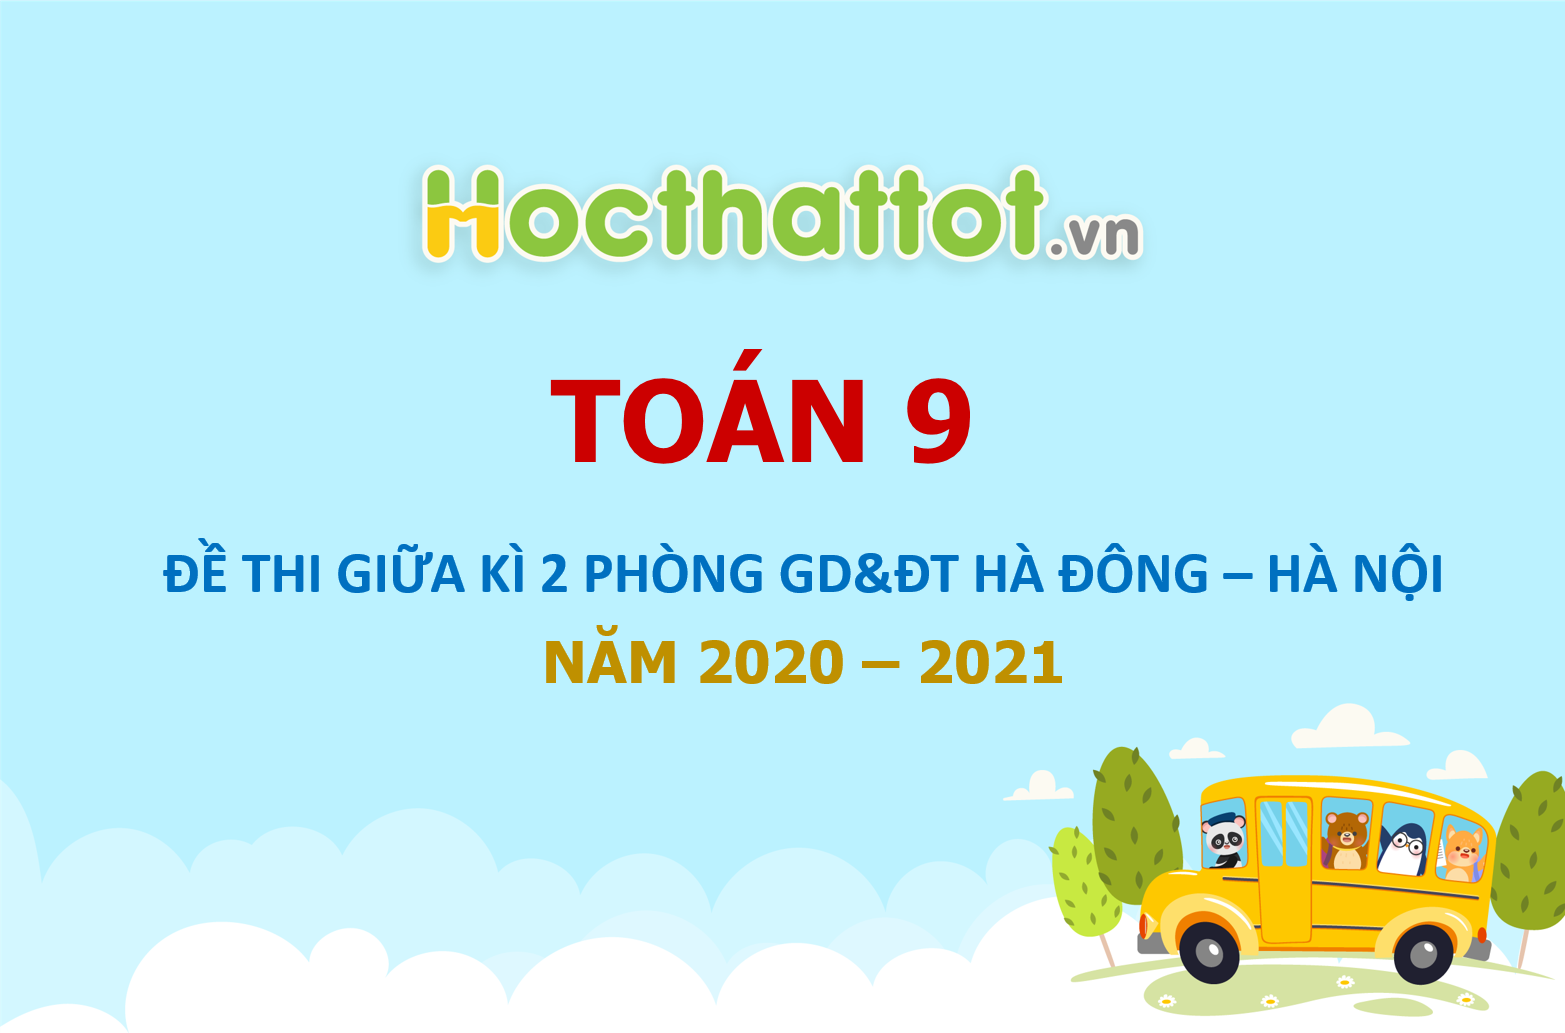 de-thi-giua-ki-2-toan-9-nam-2020-2021-phong-gddt-ha-dong-ha-noi